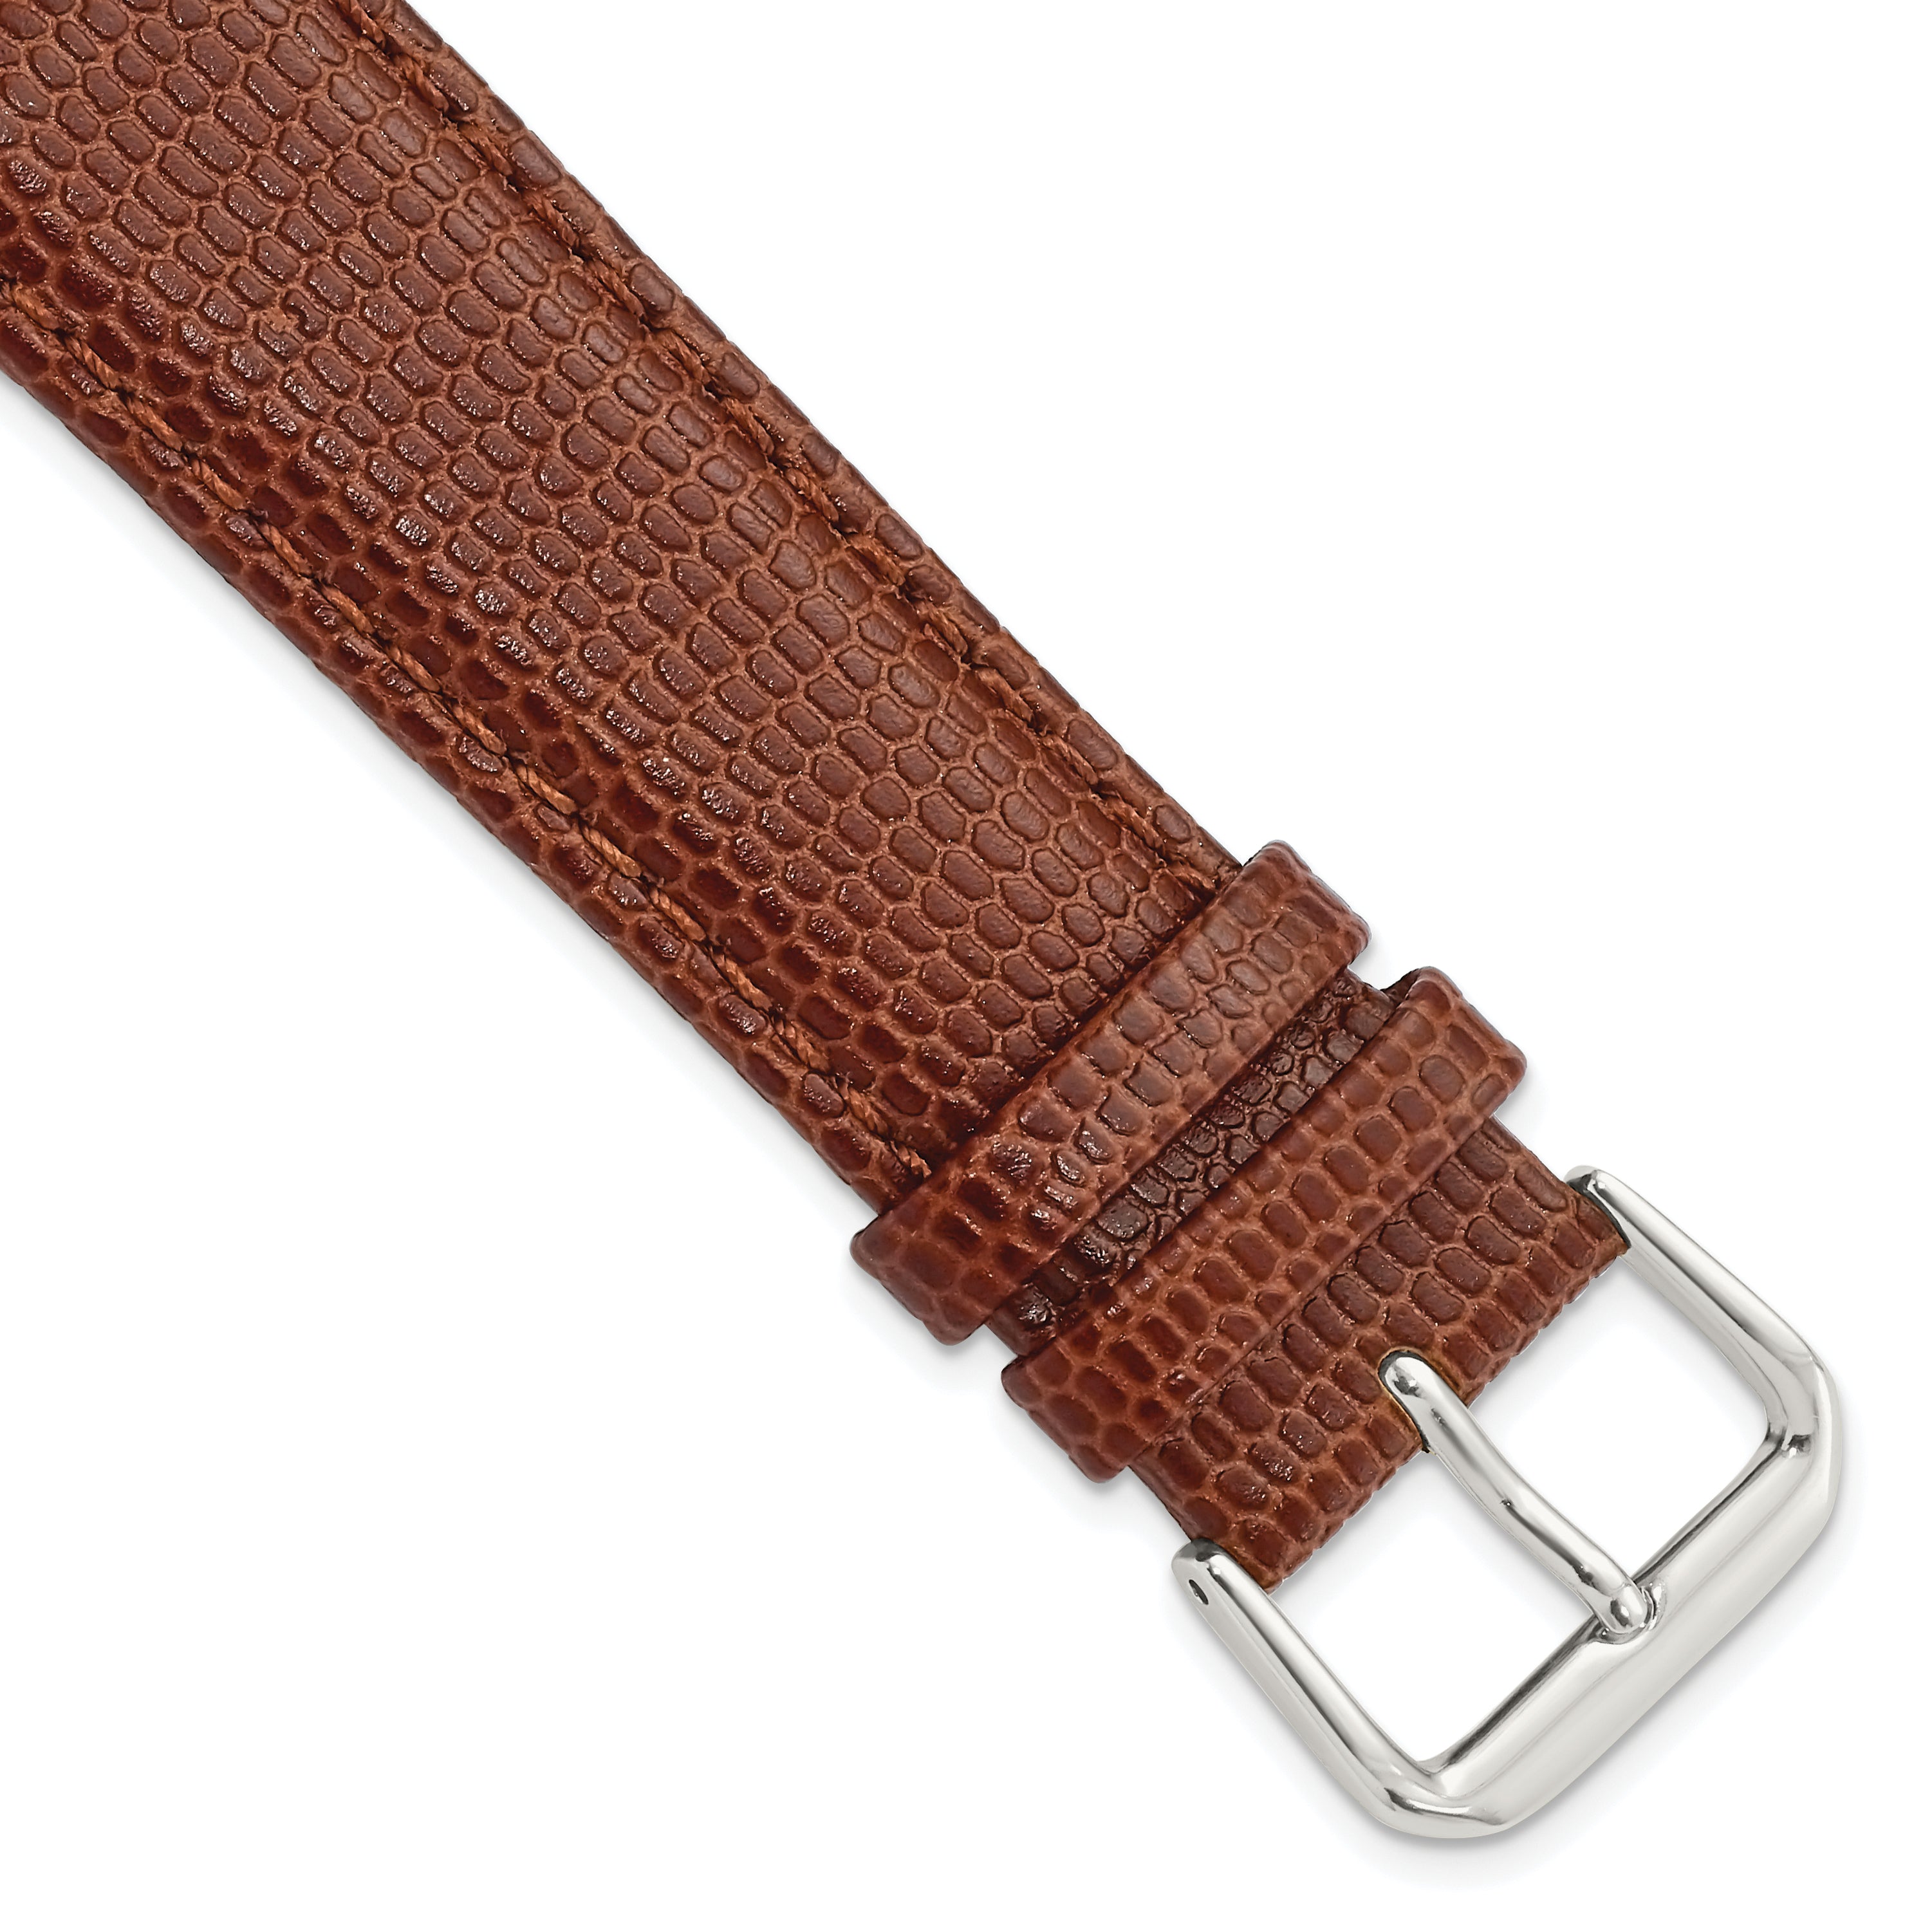 DeBeer 20mm Havana Lizard Grain Leather with Silver-tone Buckle 7.5 inch Watch Band